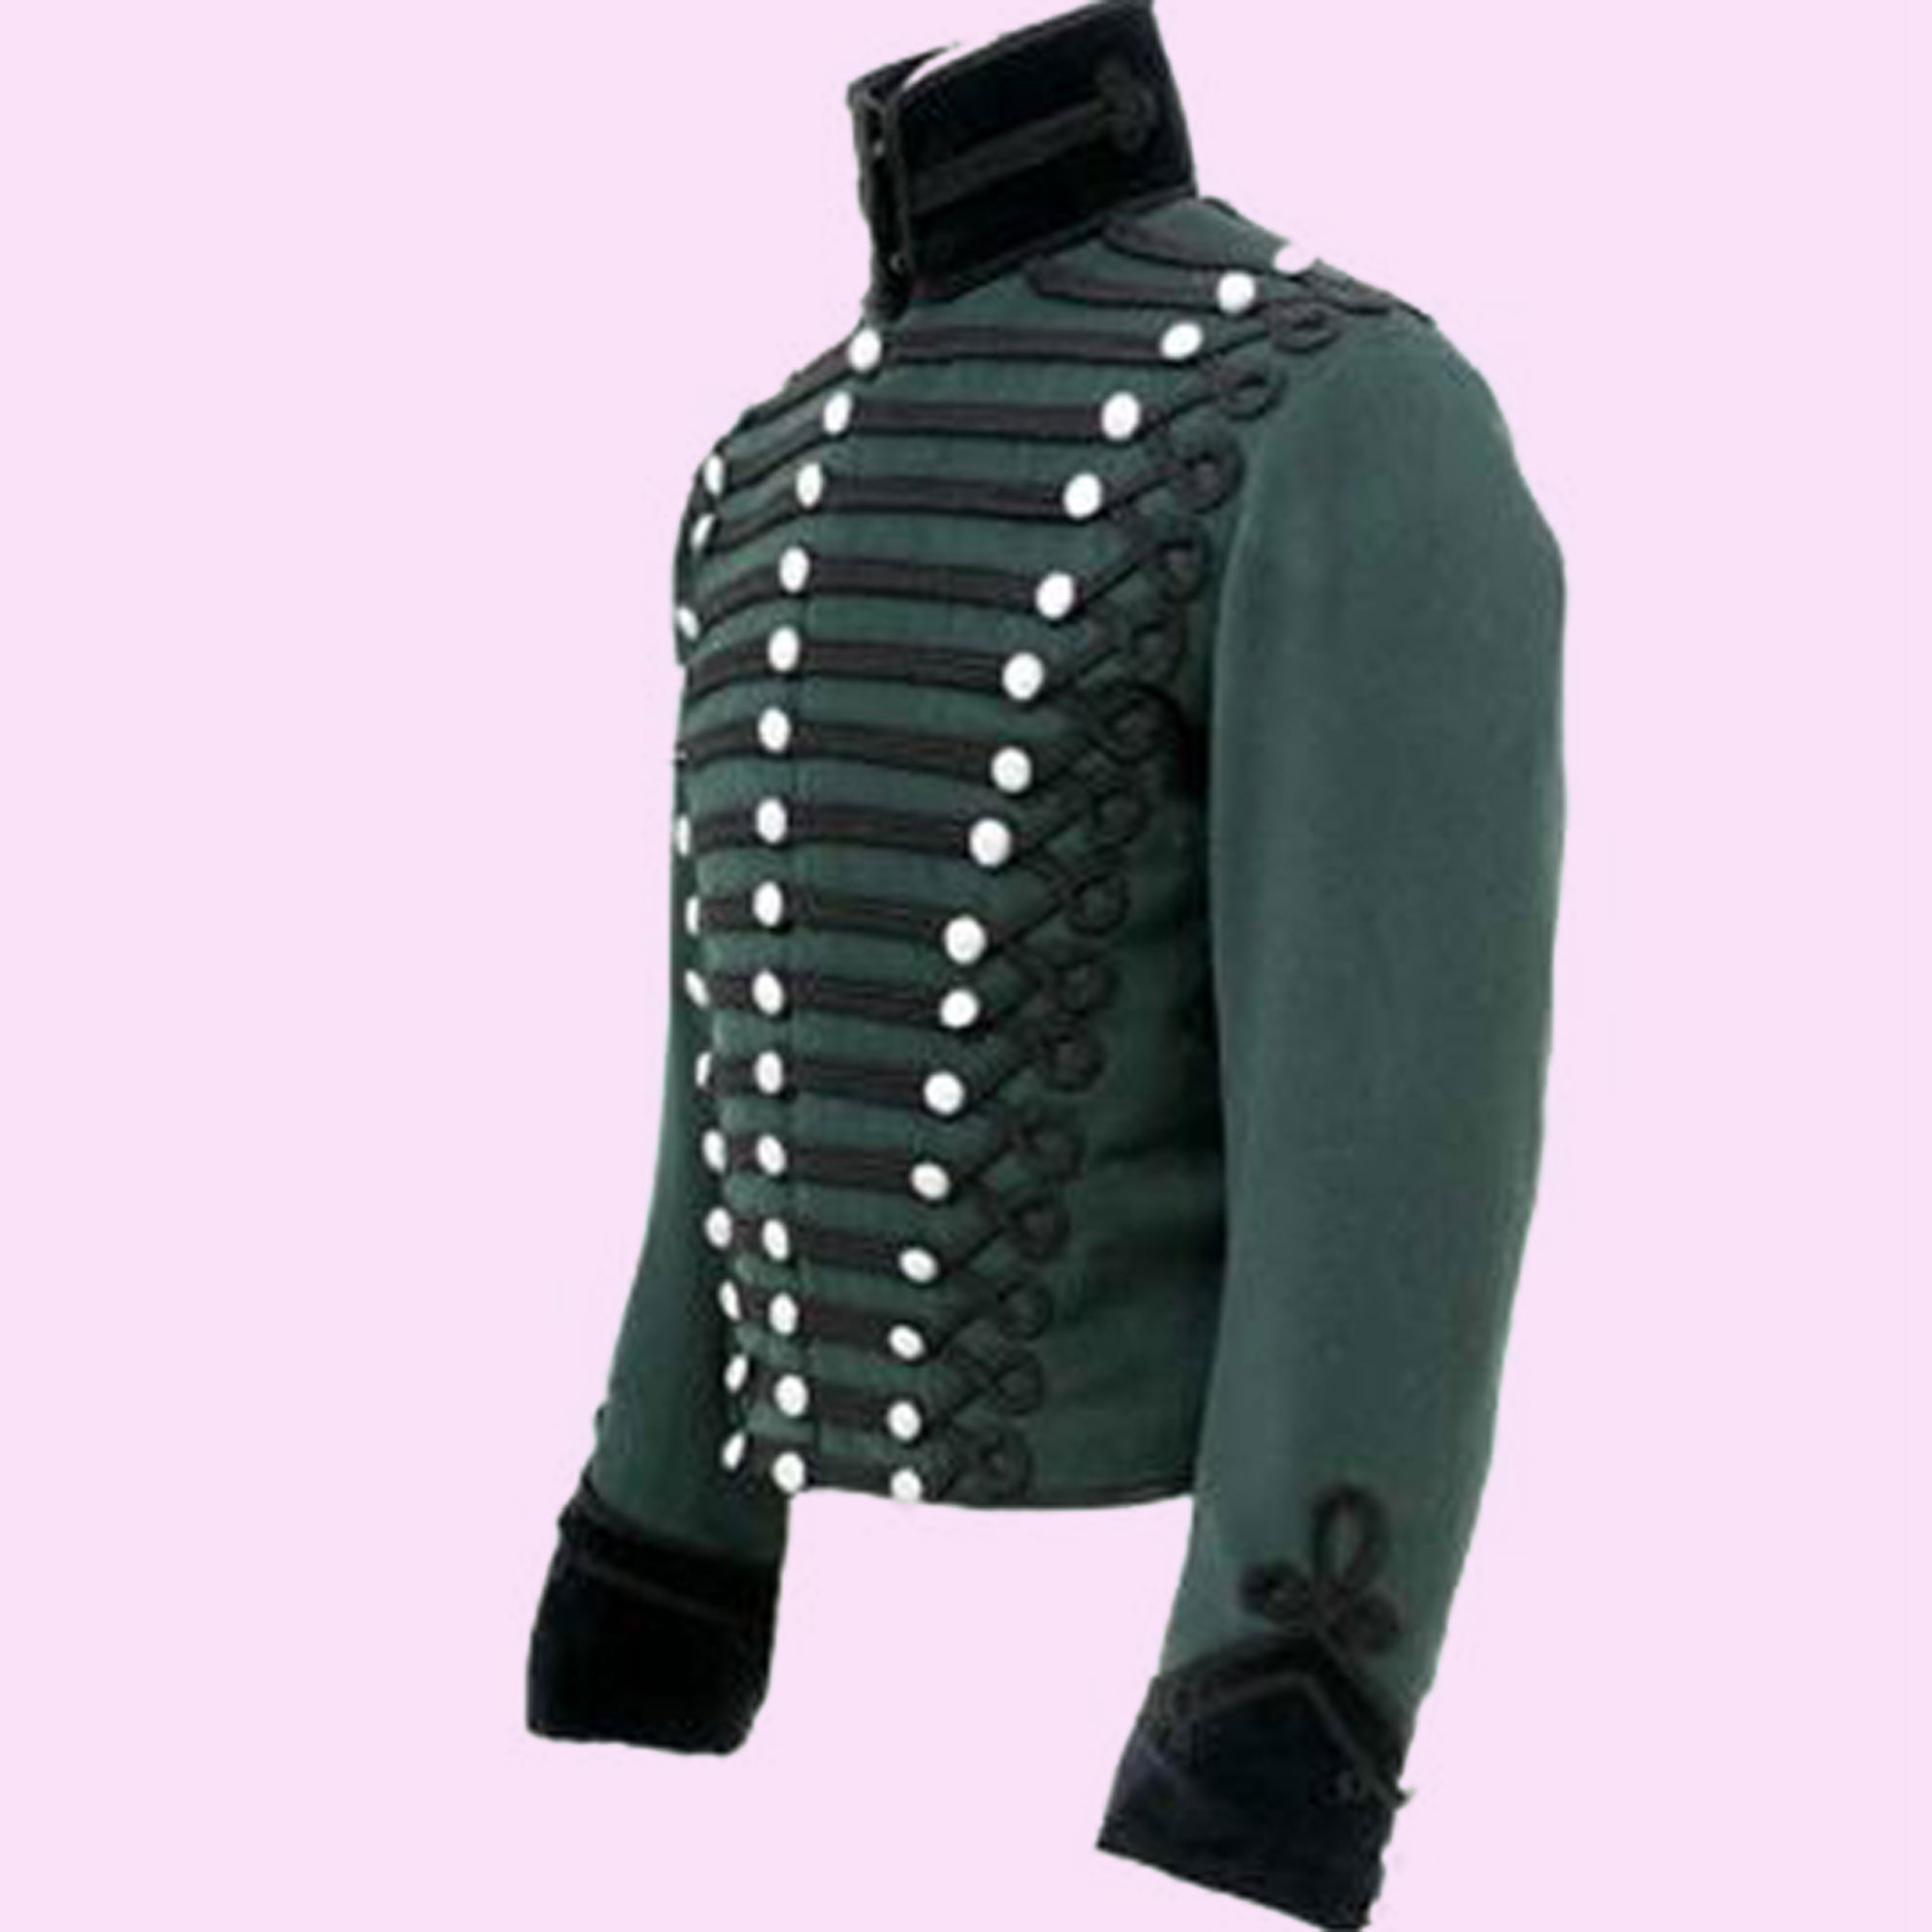 Buy Steampunk Military Uniform leather hussar jacket,Napoleonic ...